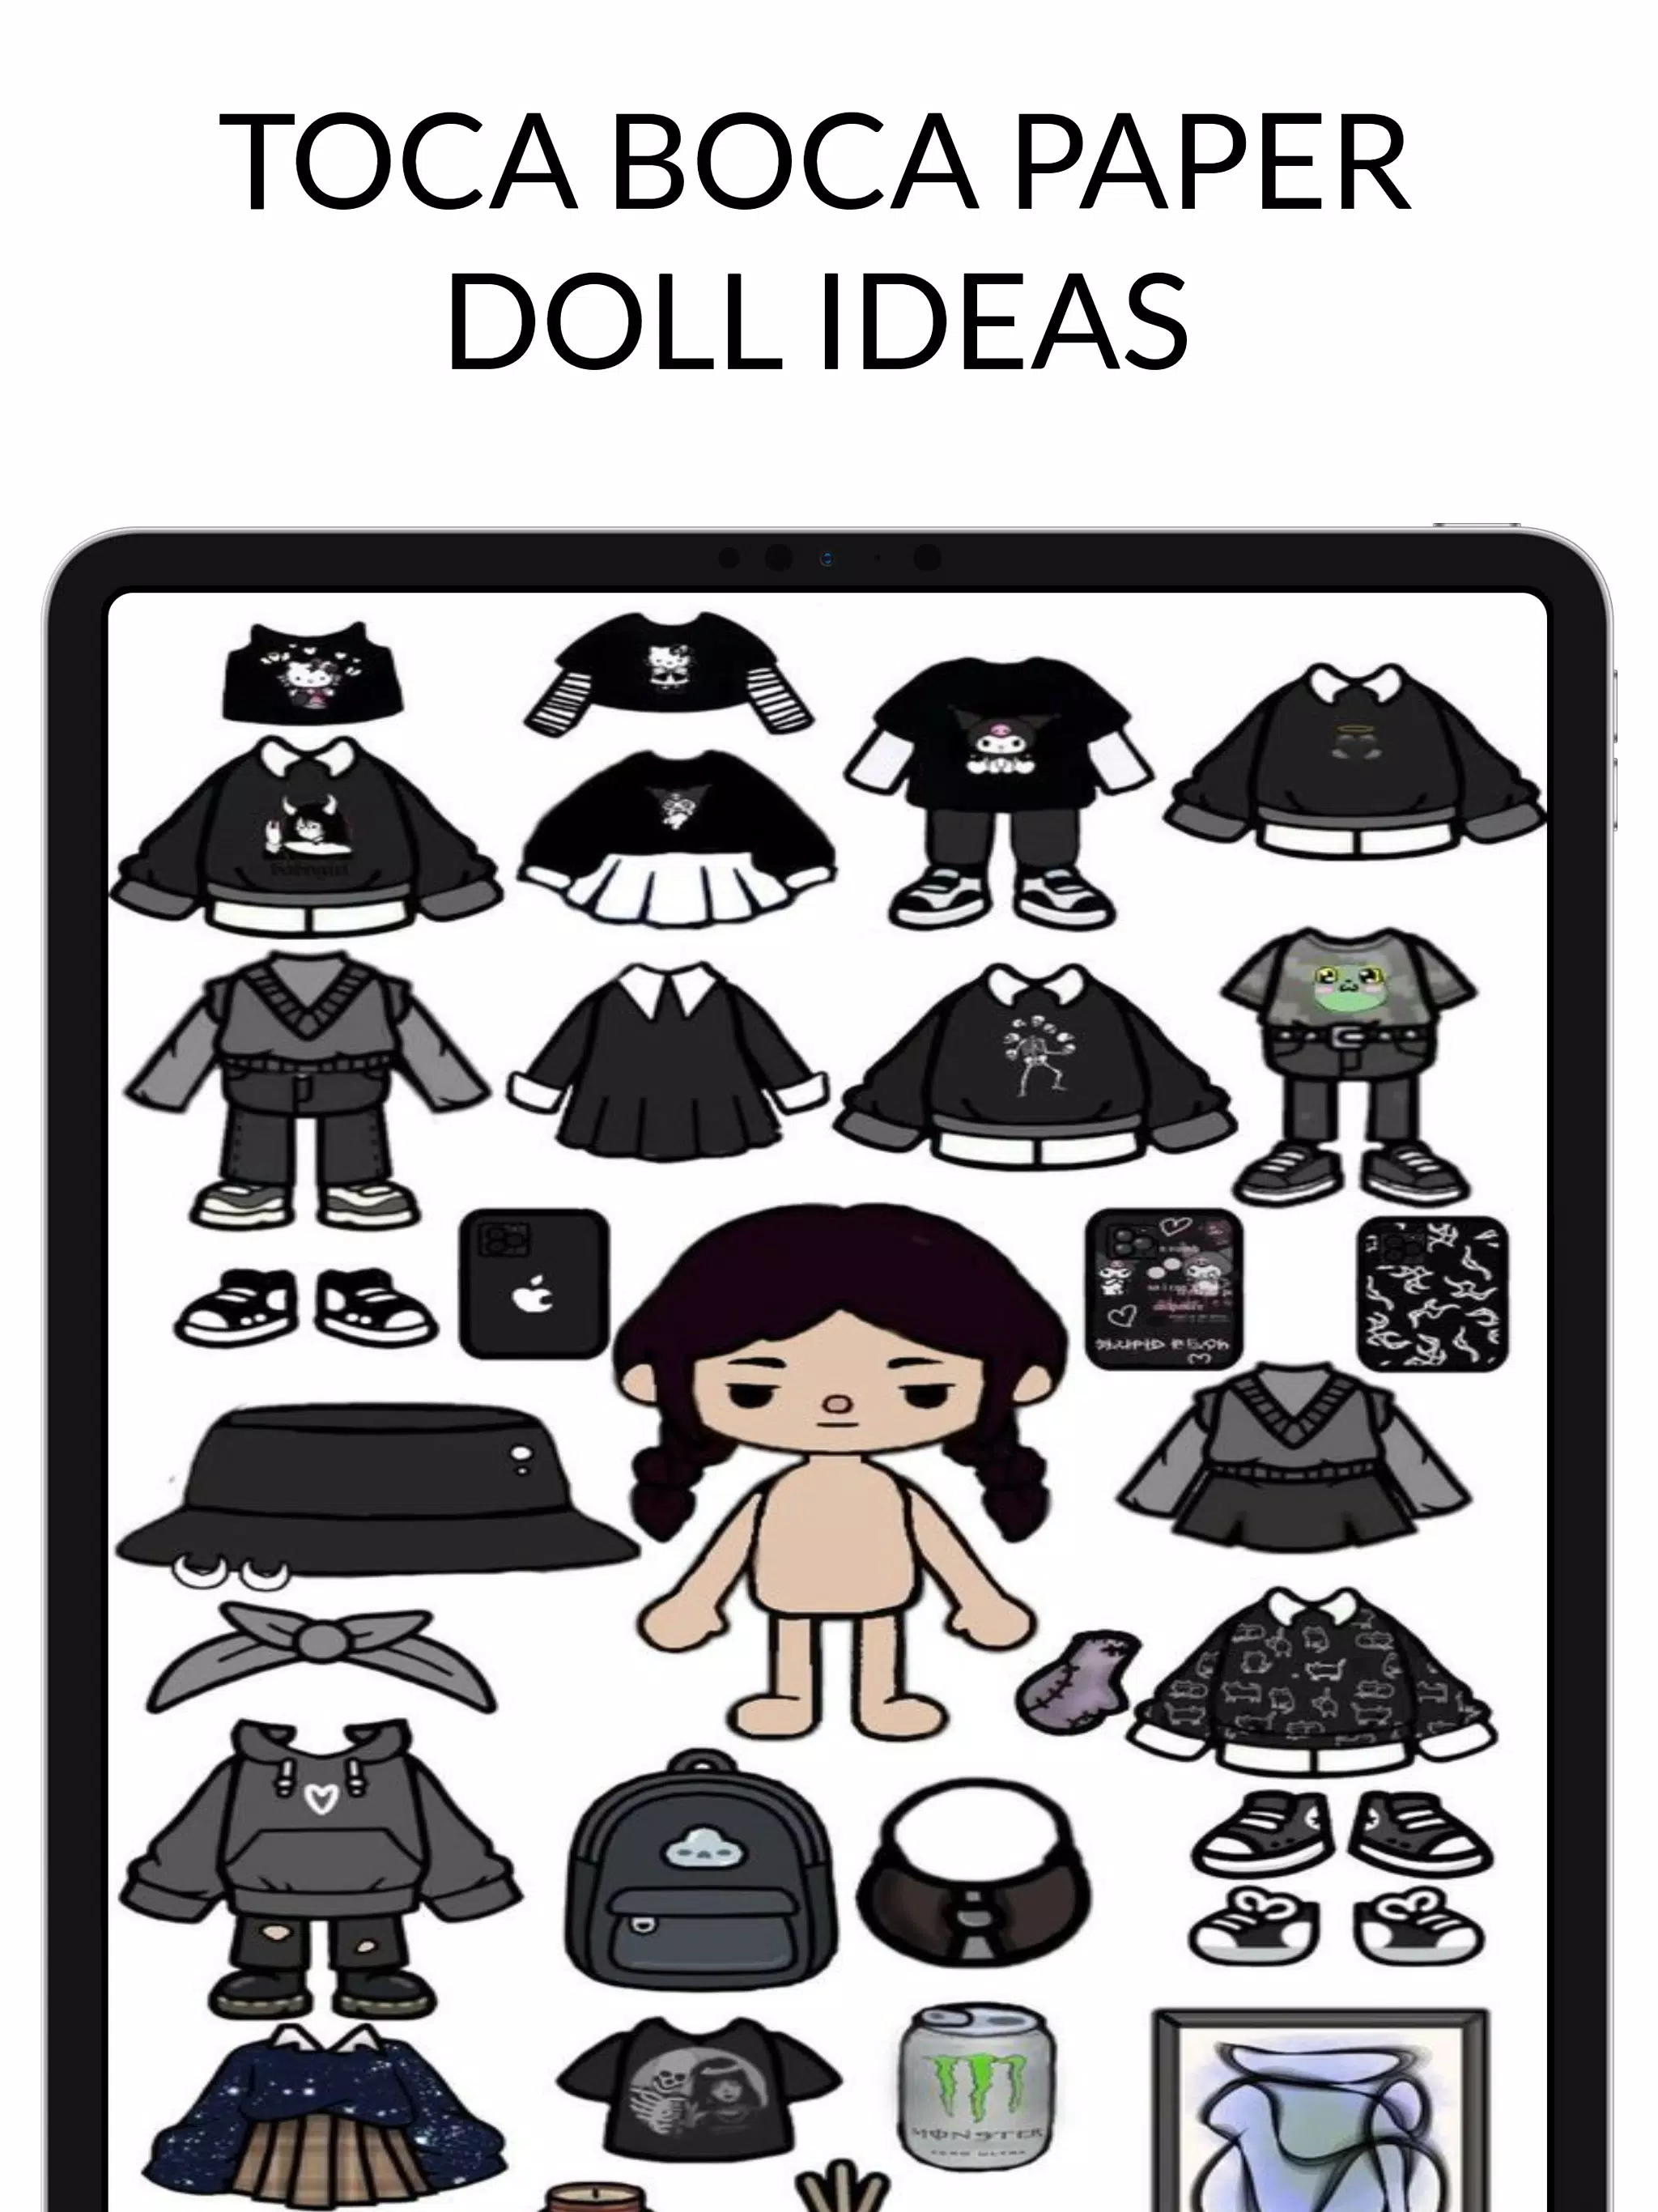 Wednesday Toca Boca Paper Doll | Poster